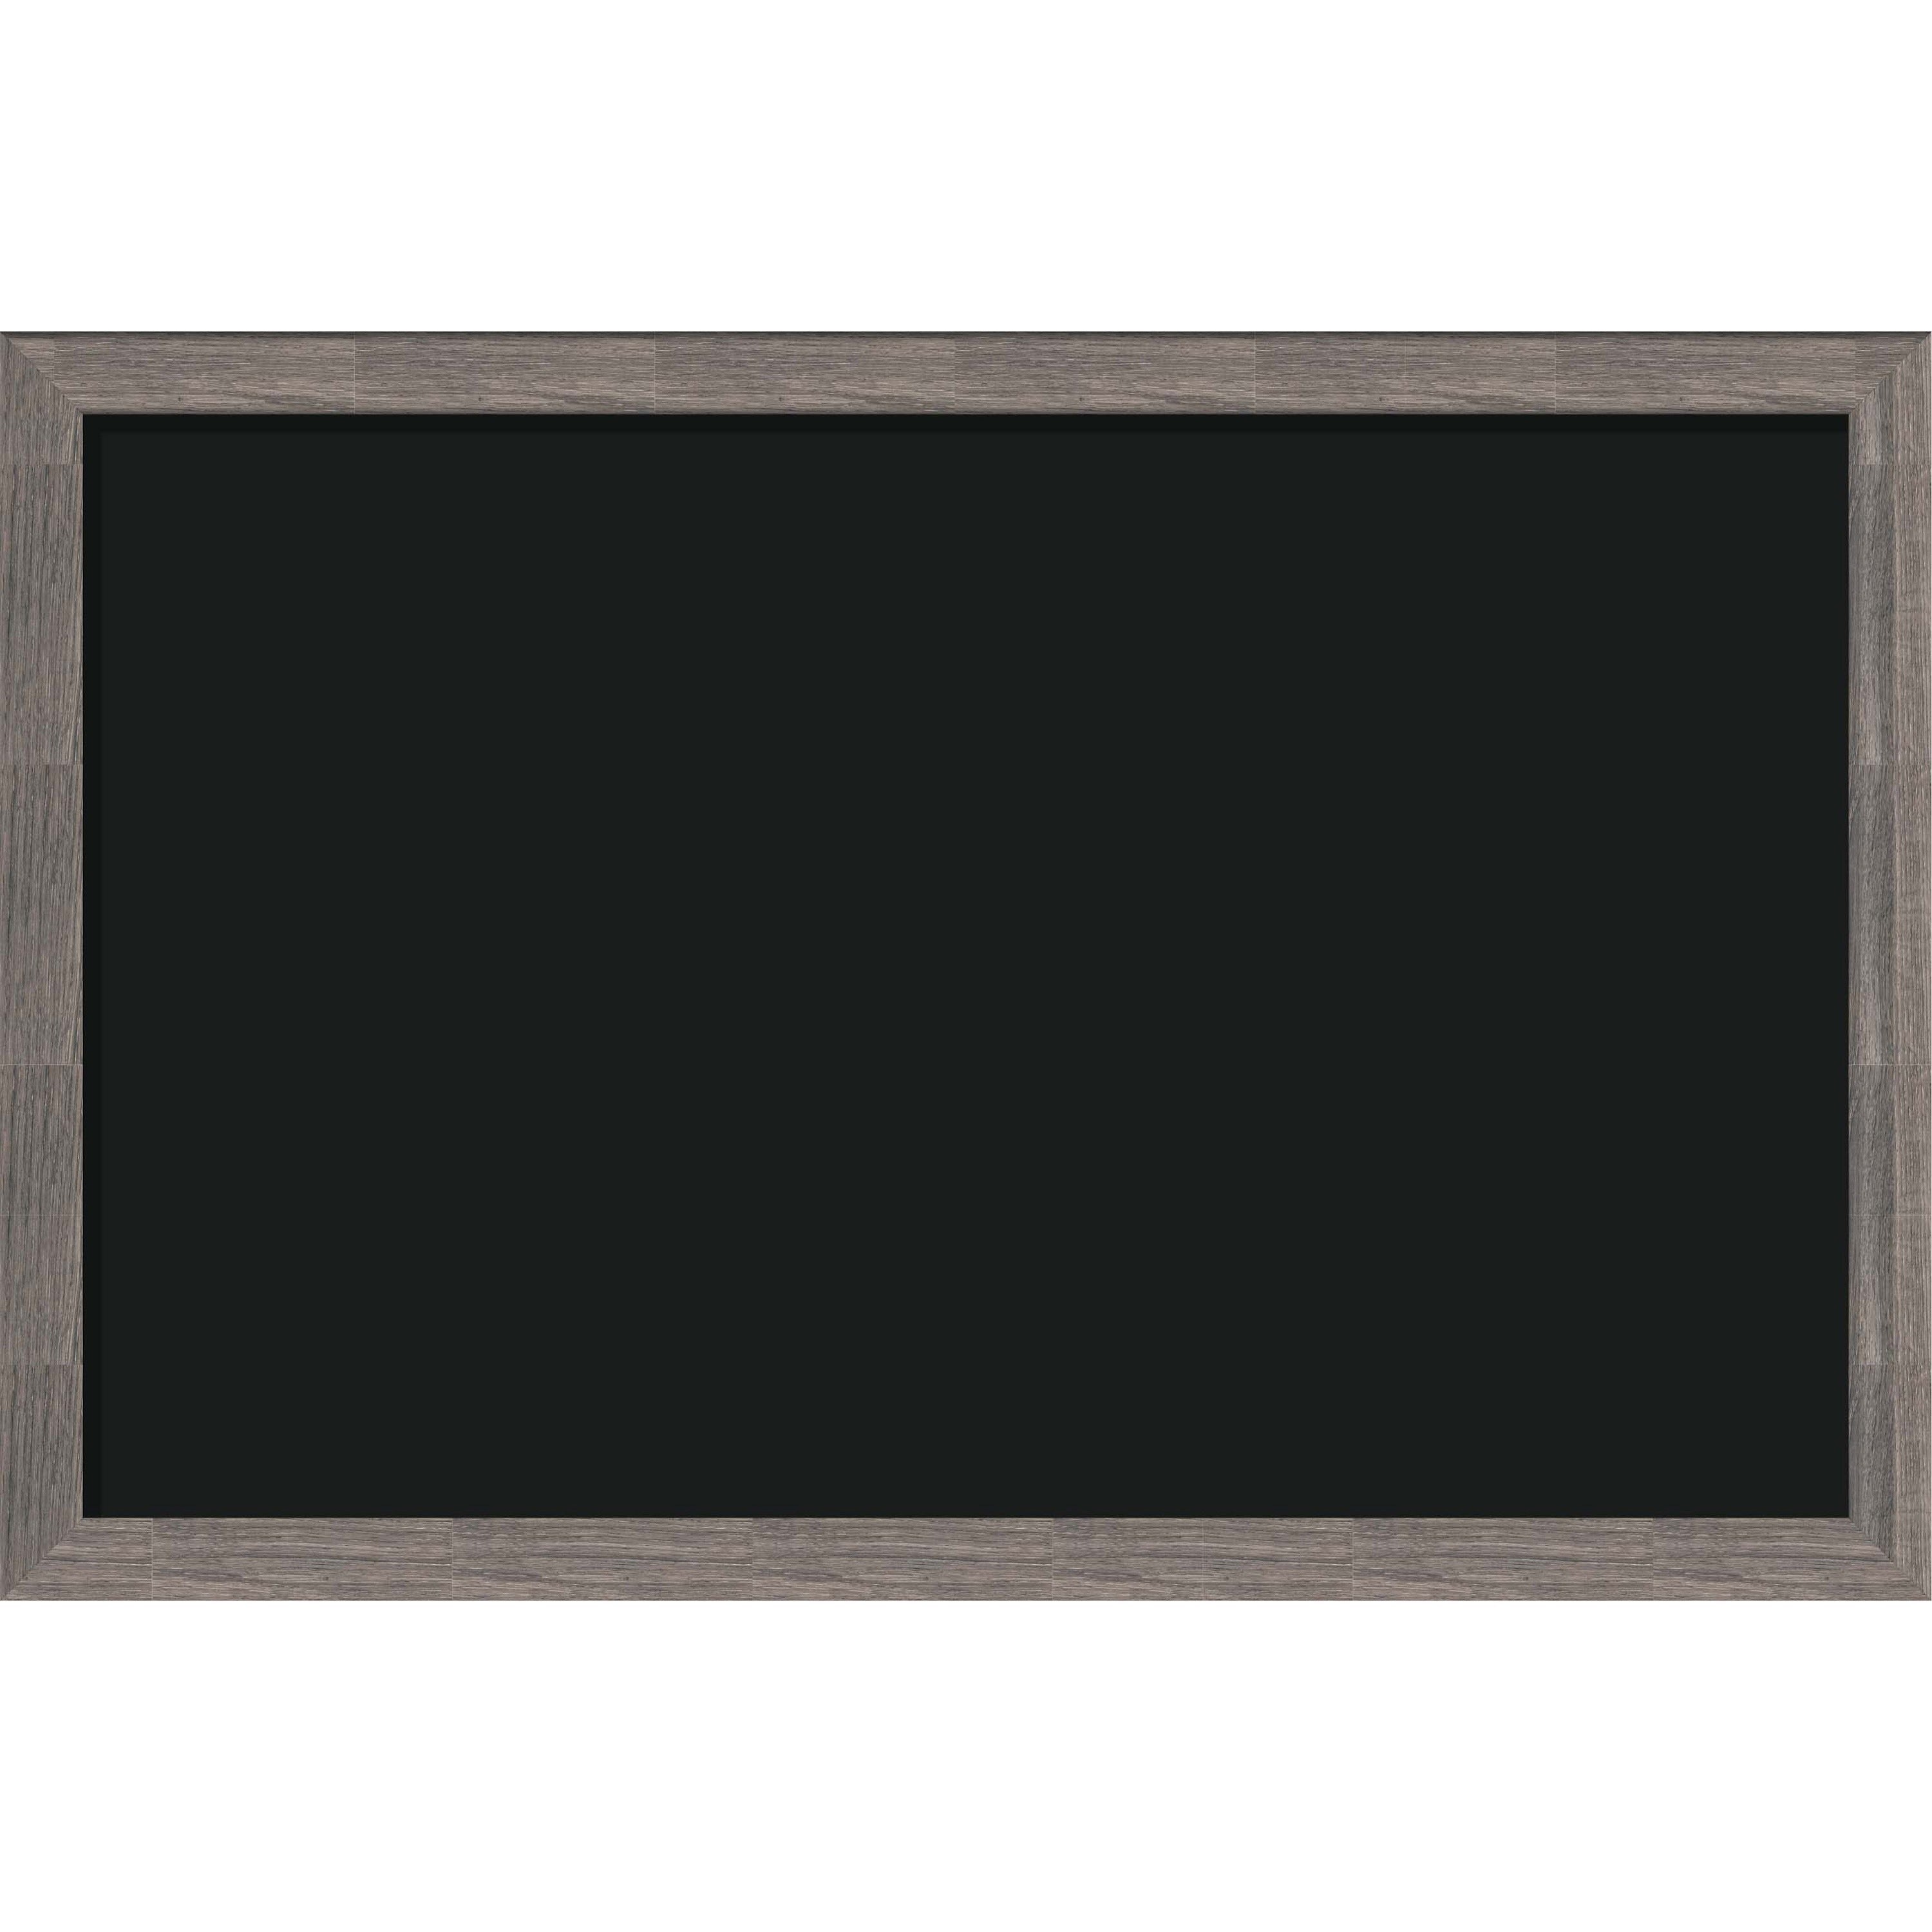 u-brands-decor-magnetic-chalkboard-23-width-x-35-height-rustic-wood-frame-horizontal-vertical-1-each_ubr4549u0001 - 1